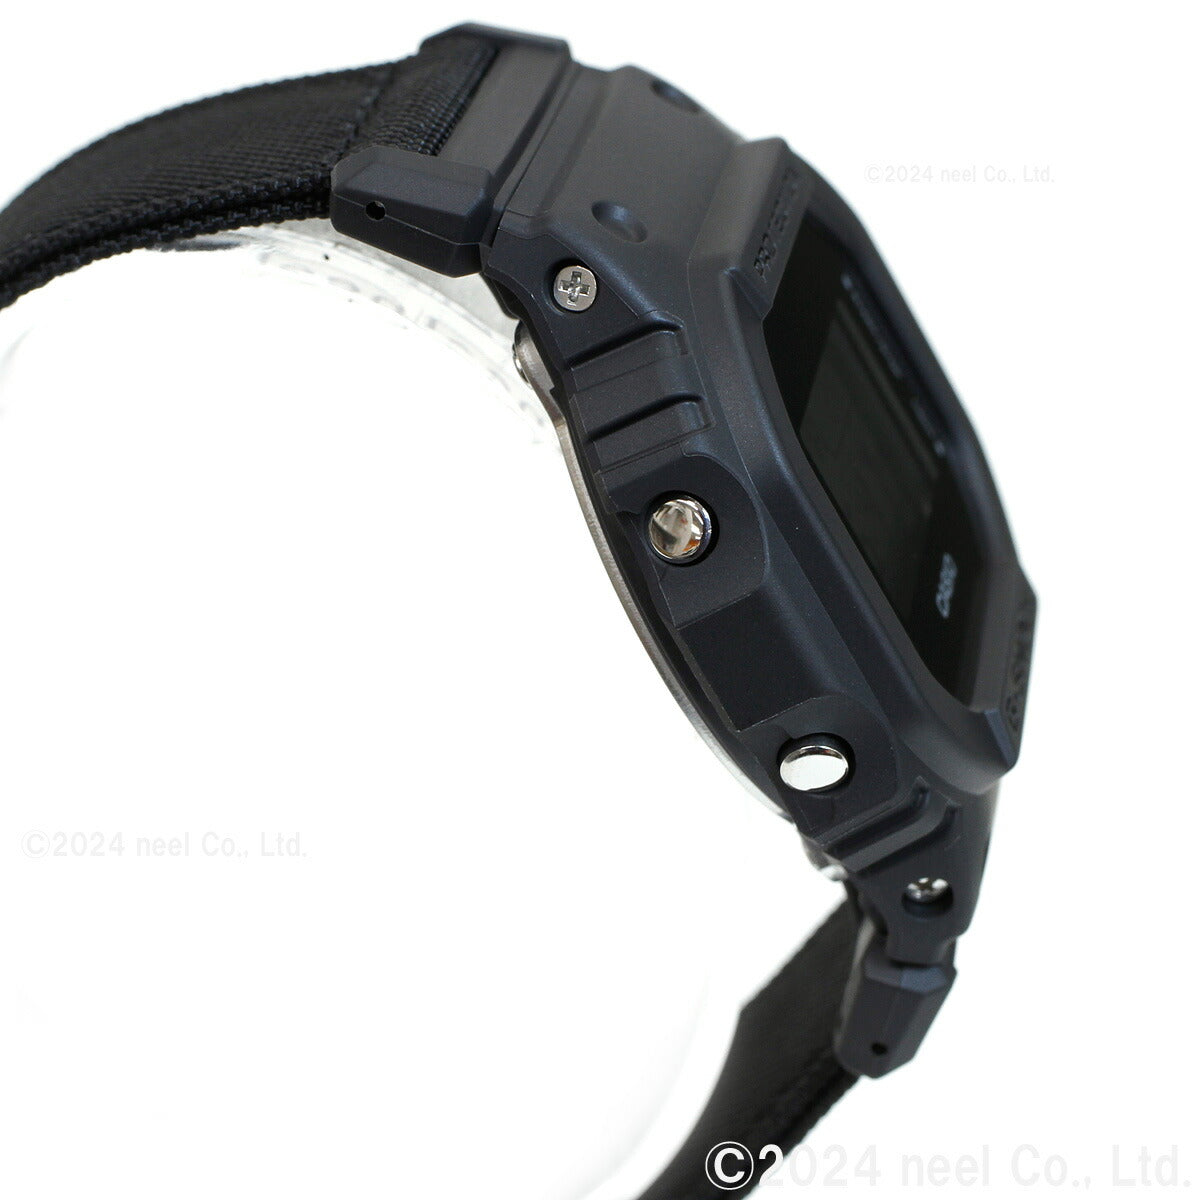 G-SHOCK デジタル カシオ Gショック CASIO 限定モデル 腕時計 メンズ DW-5600BCE-1JF Utility black【2024 新作】